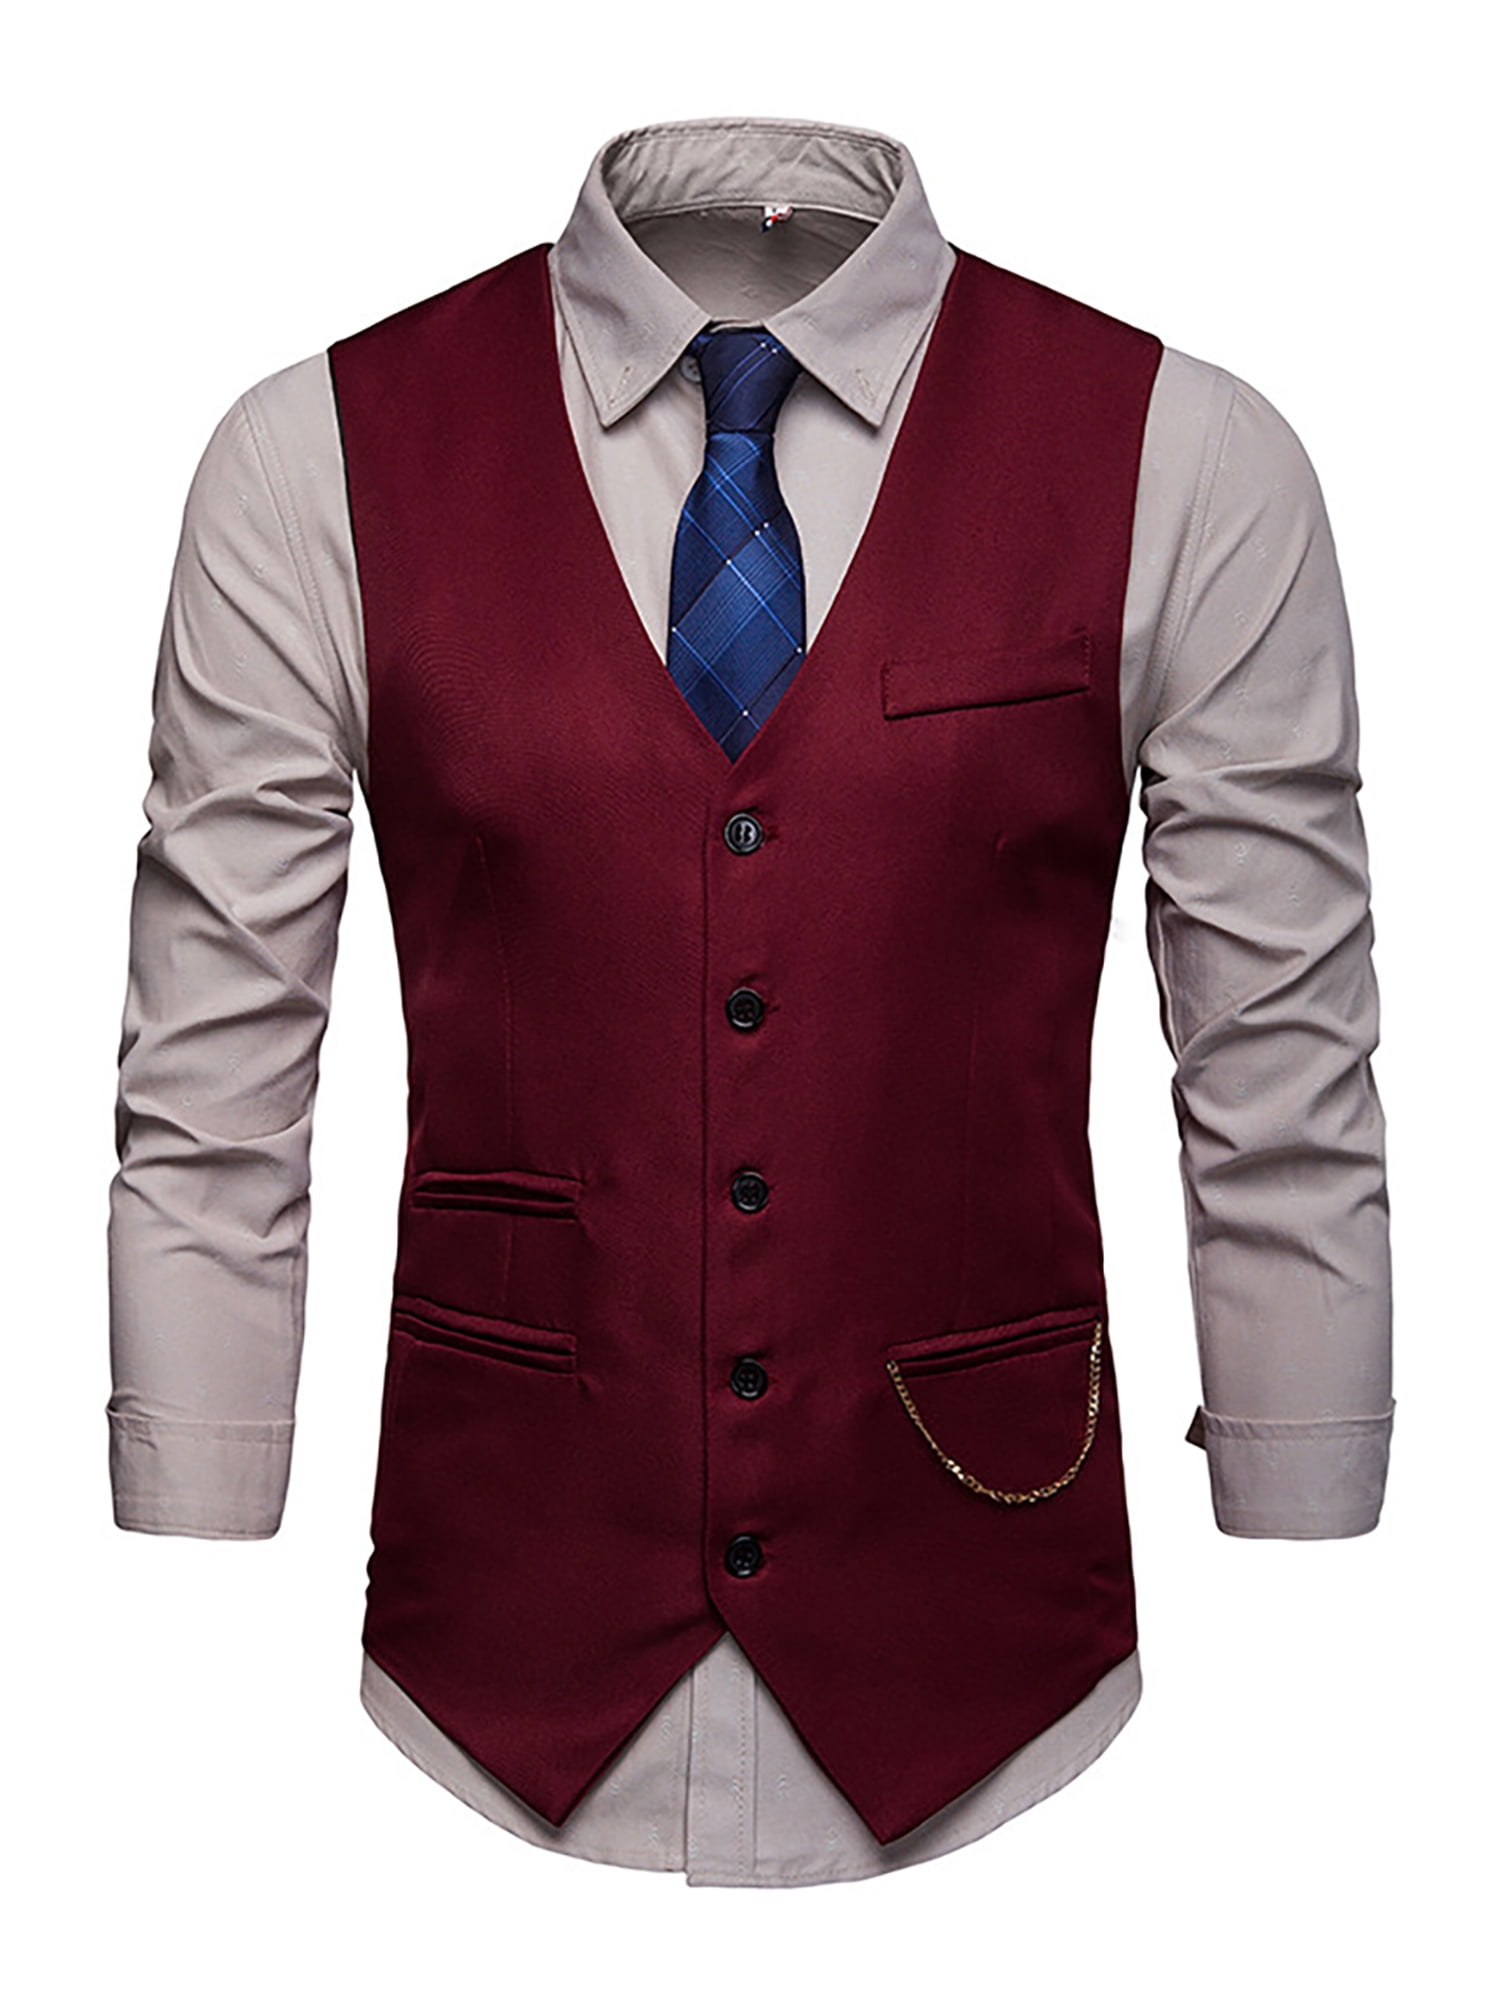 KLJR Men Stripe Print Double Breasted Sleeveless Business Suit Tuxedo Vest